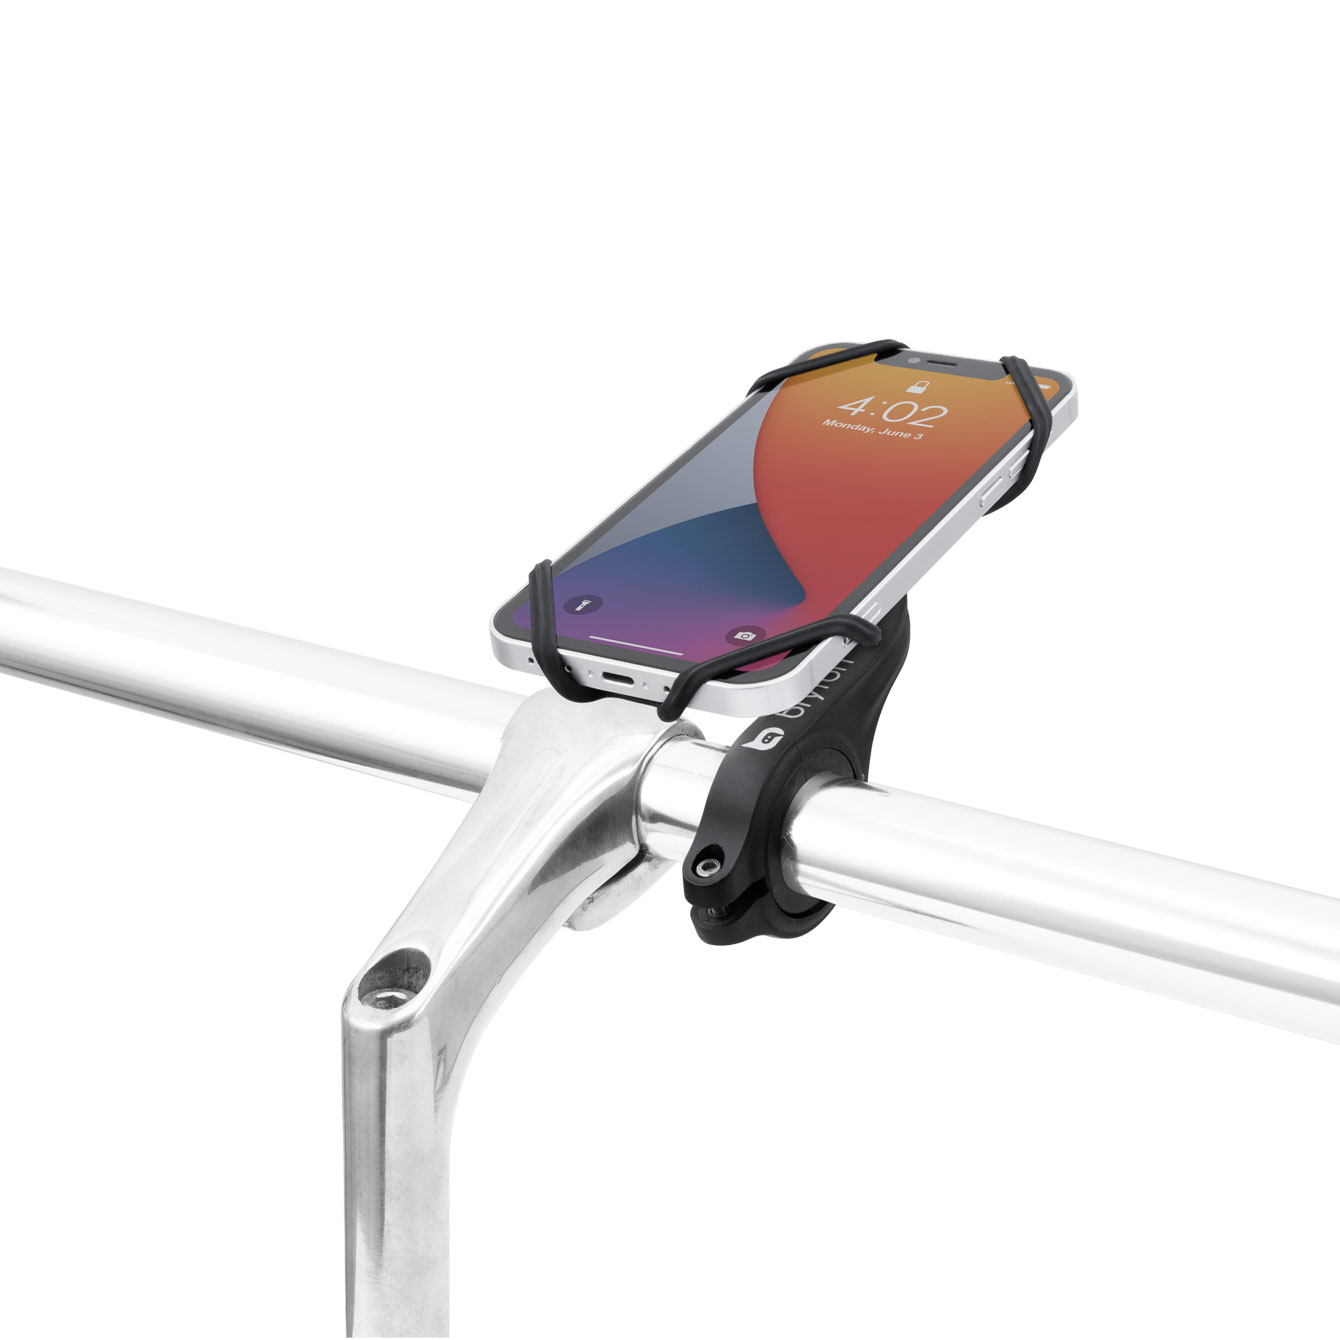 BONE Bike Tie Connect Garmin Kit - Fits Smartphone 4.7-7.2 inch